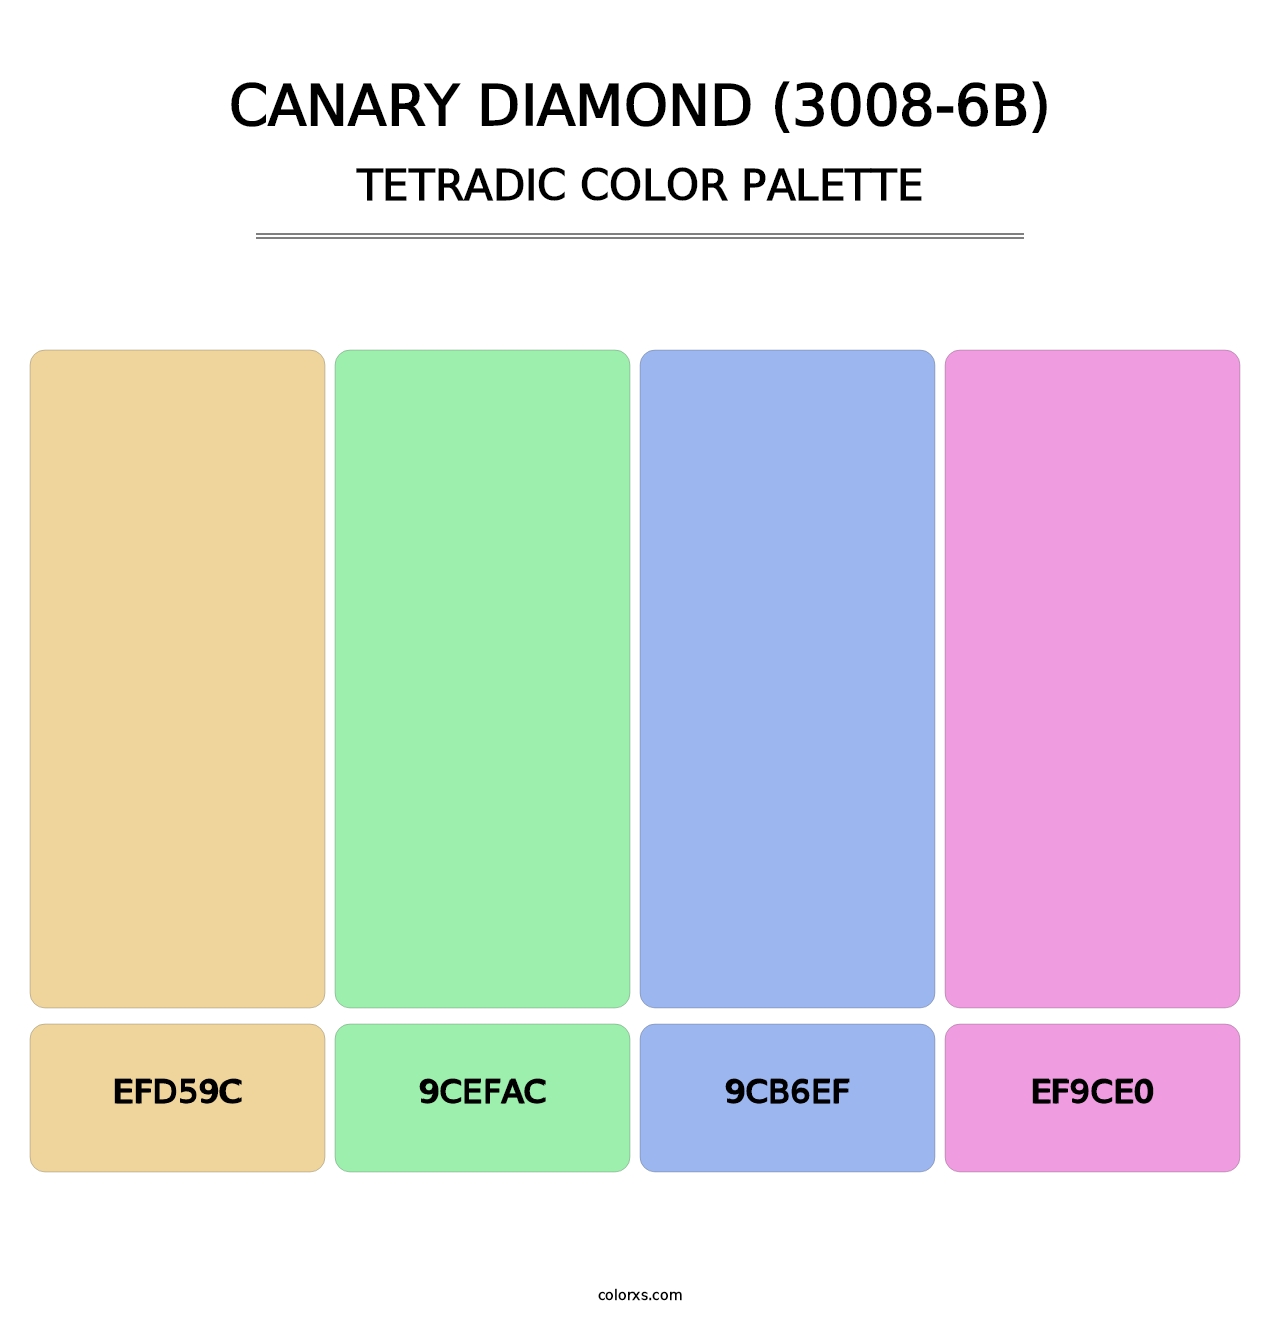 Canary Diamond (3008-6B) - Tetradic Color Palette